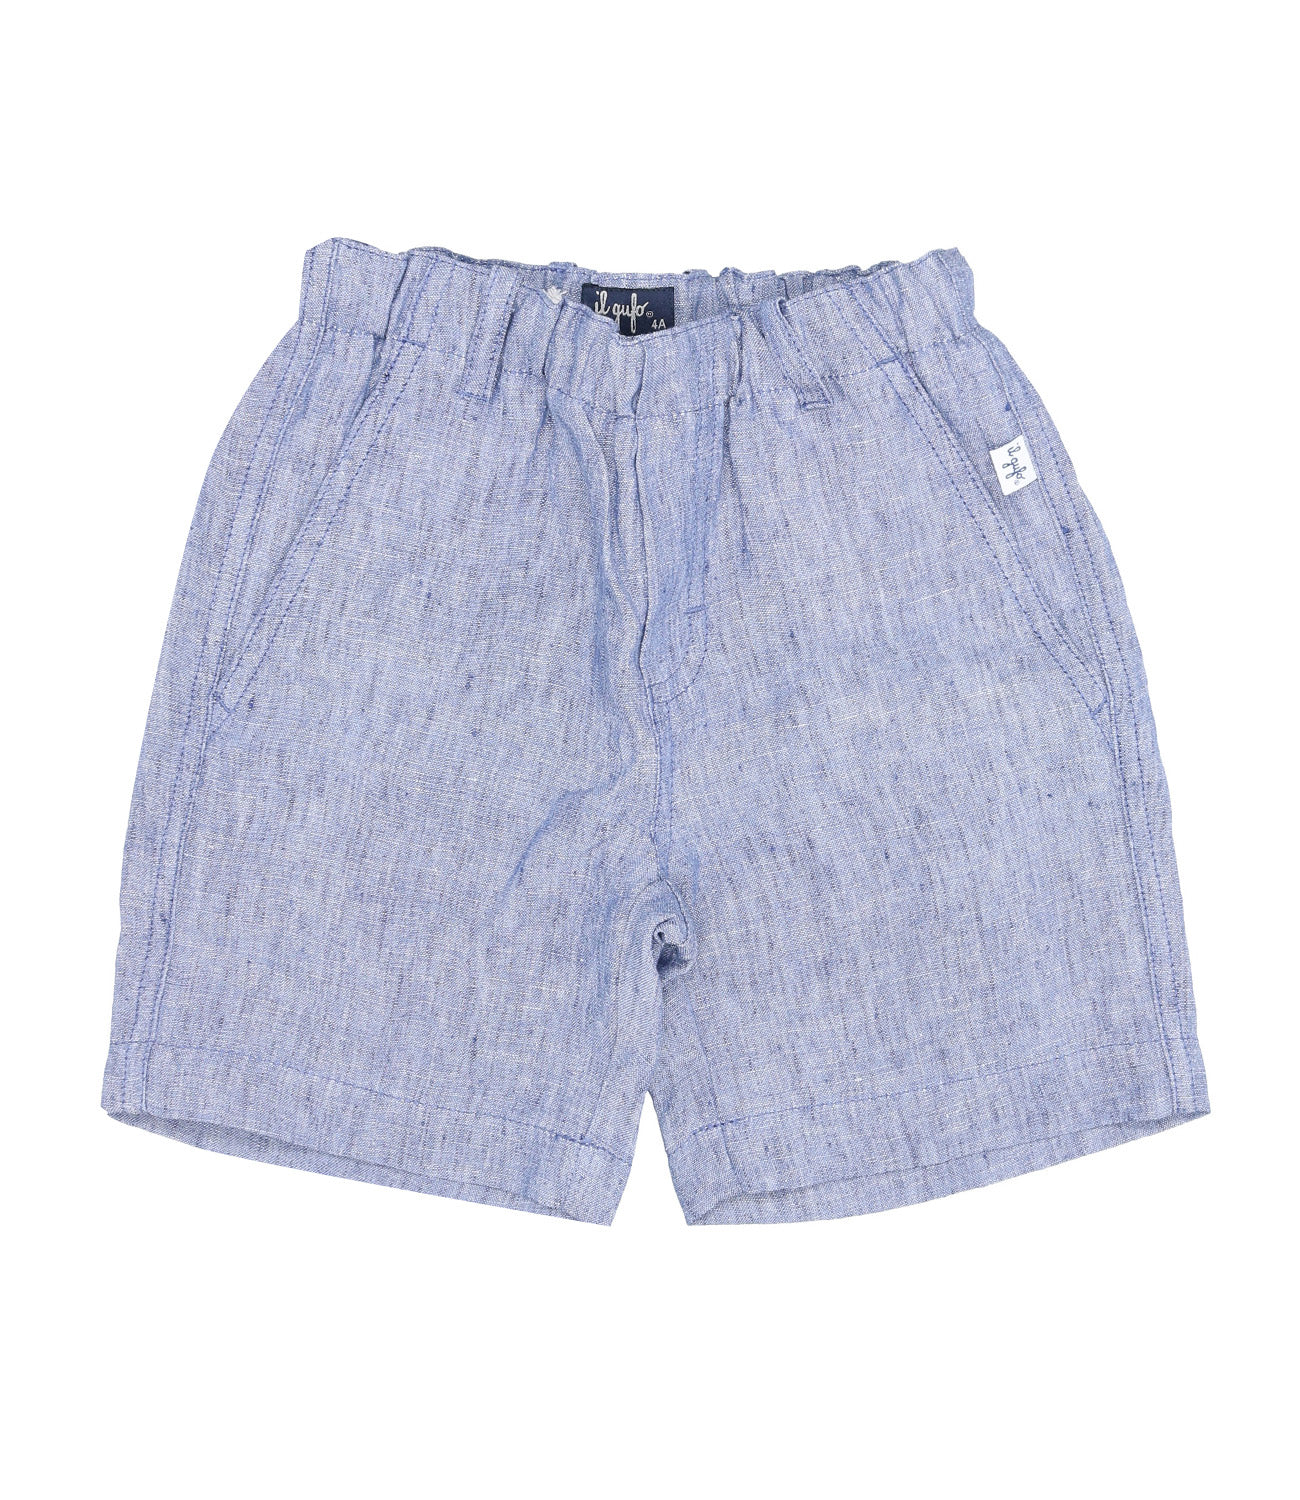 Bermuda Shorts Blue